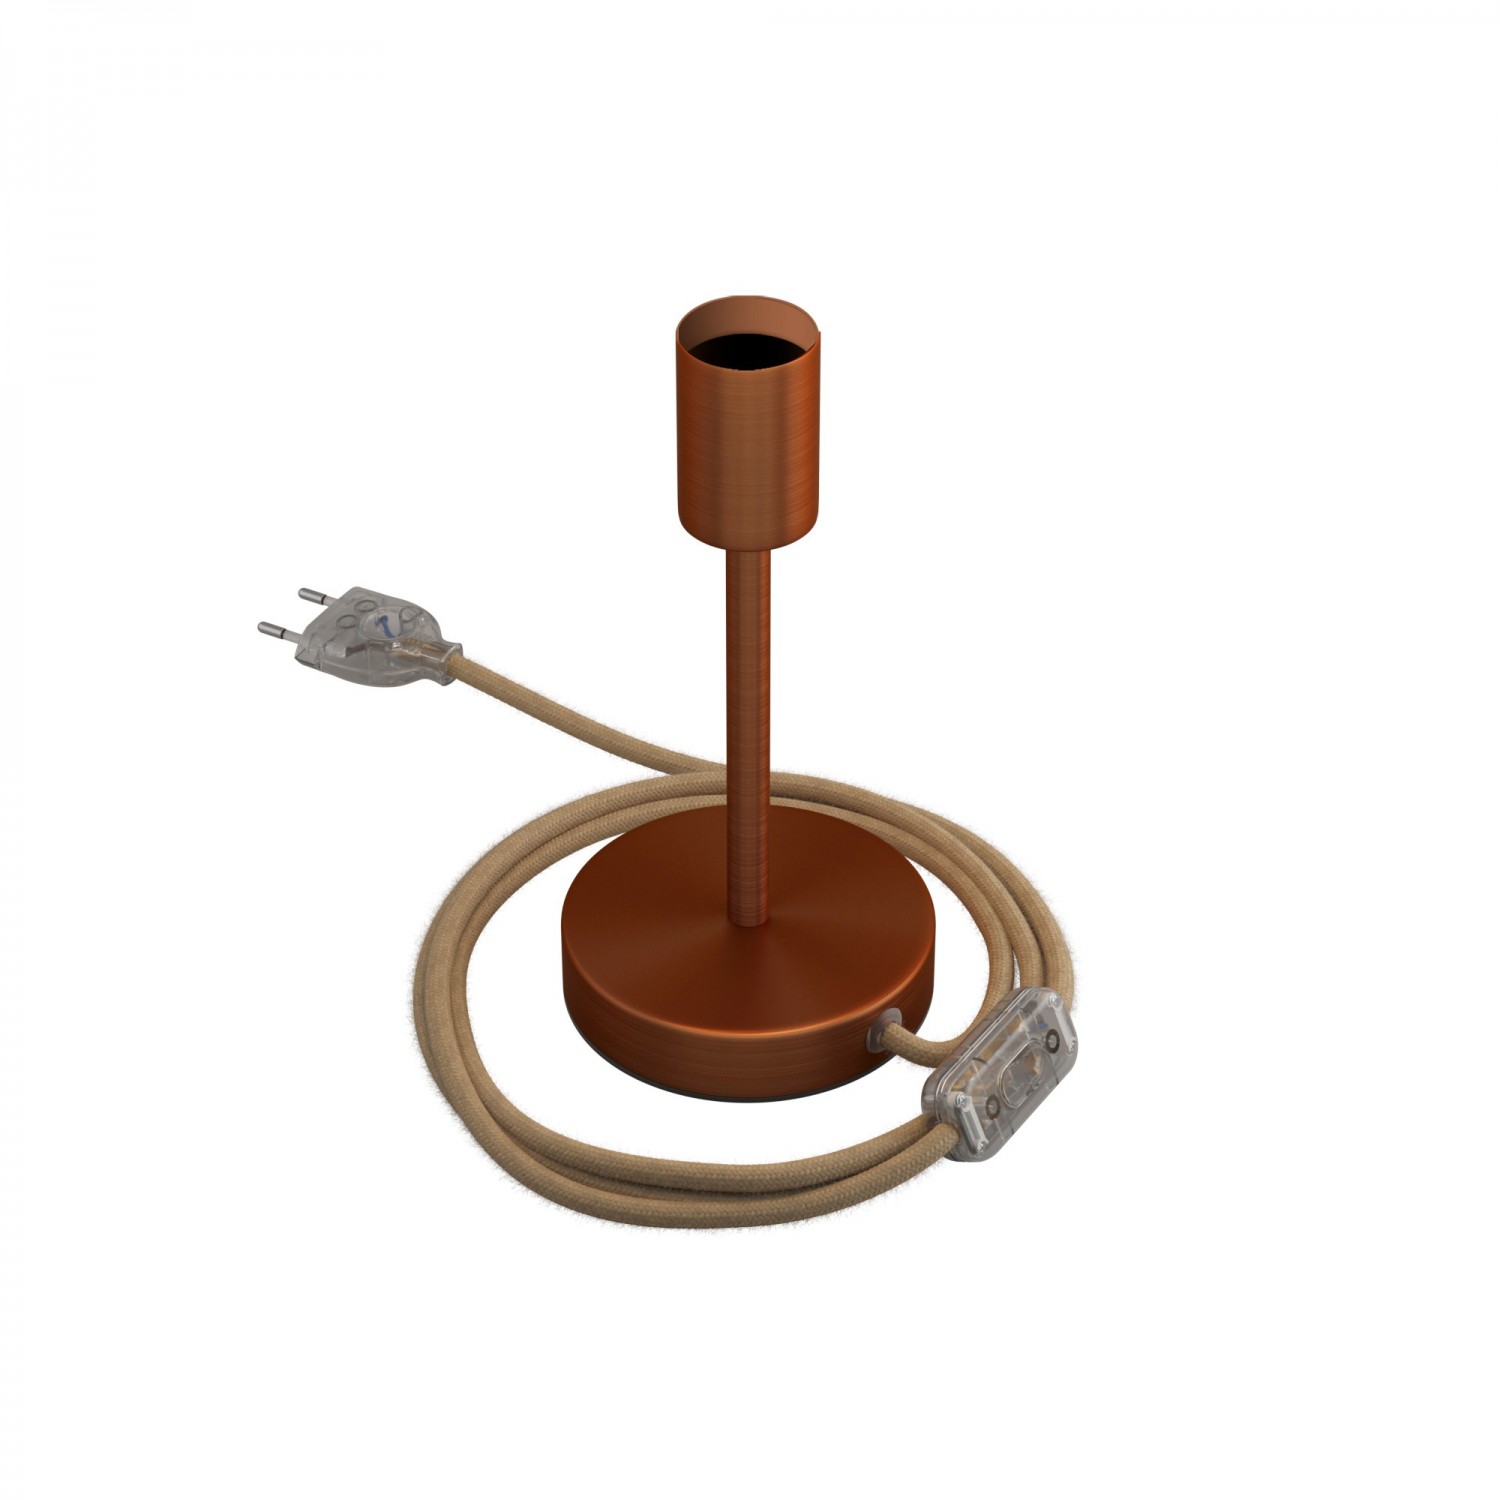 Alzaluce - Lámpara de mesa de metal con clavija de 2 polos